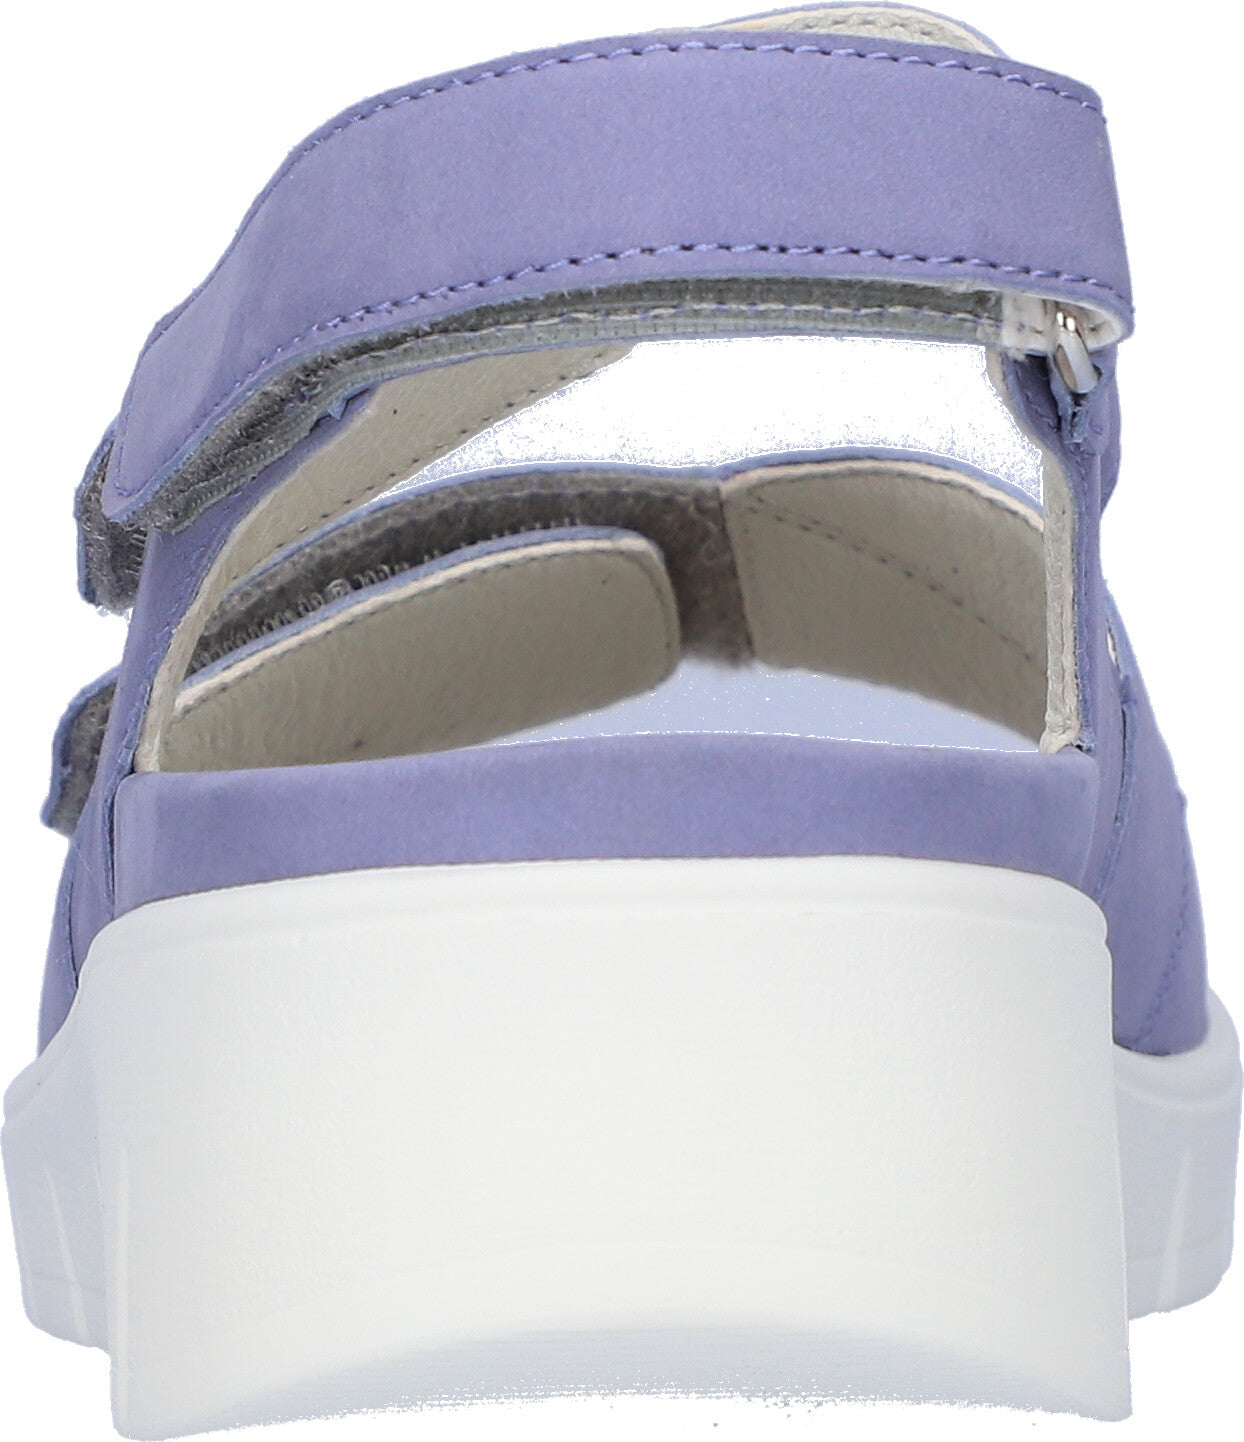 Waldlaufer 658001 191 271 K-Adea Ladies Lavender Nubuck Arch Support Touch Fastening Sandals